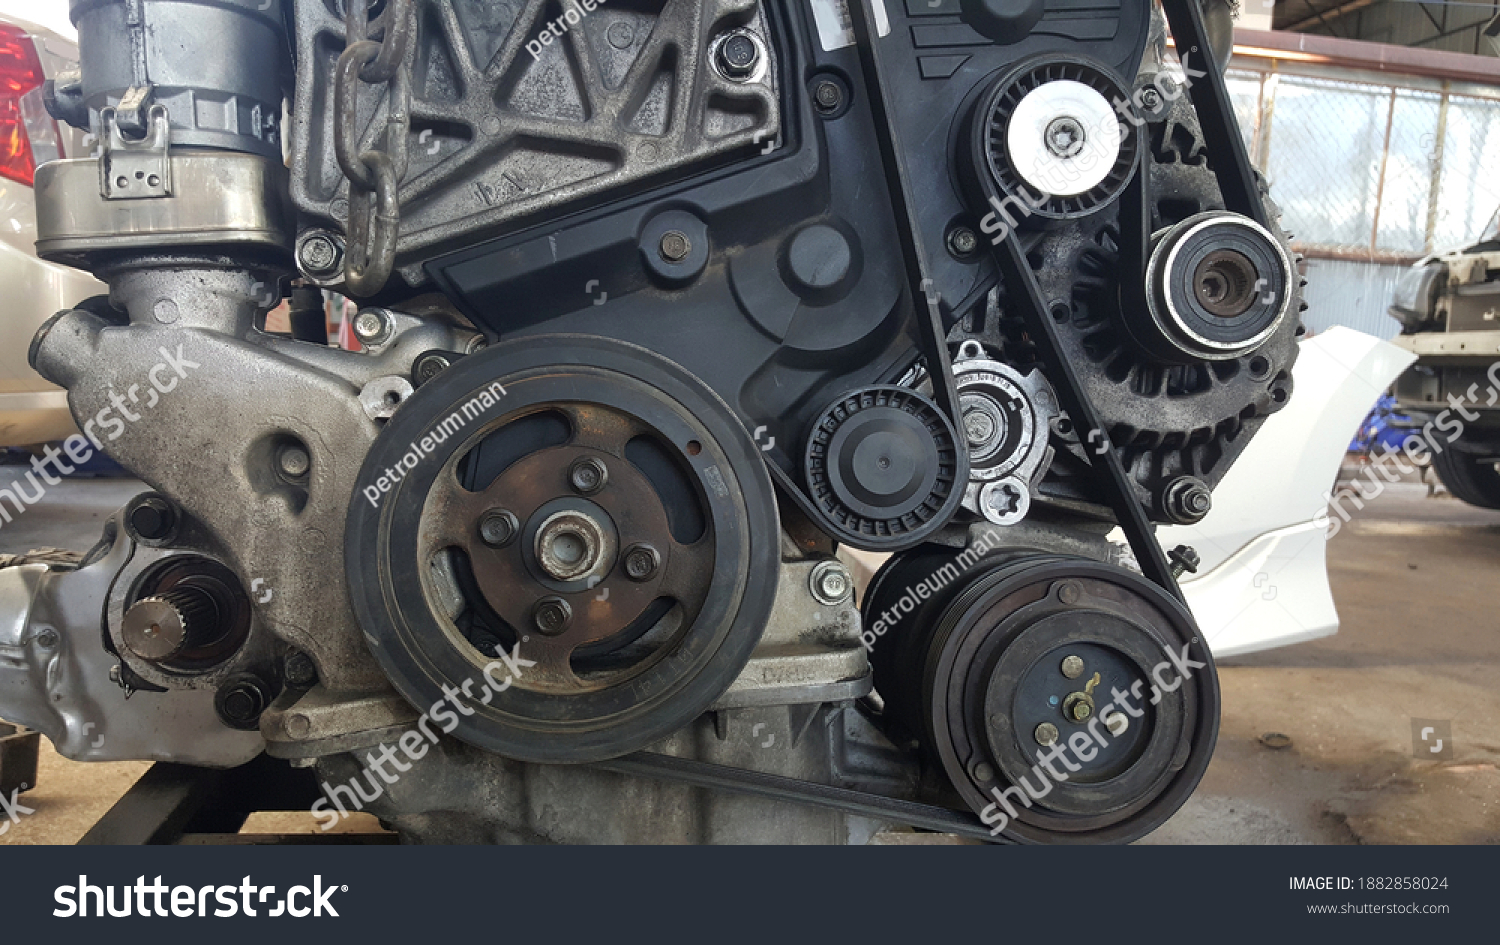 43,433 Auto belt Images, Stock Photos & Vectors | Shutterstock